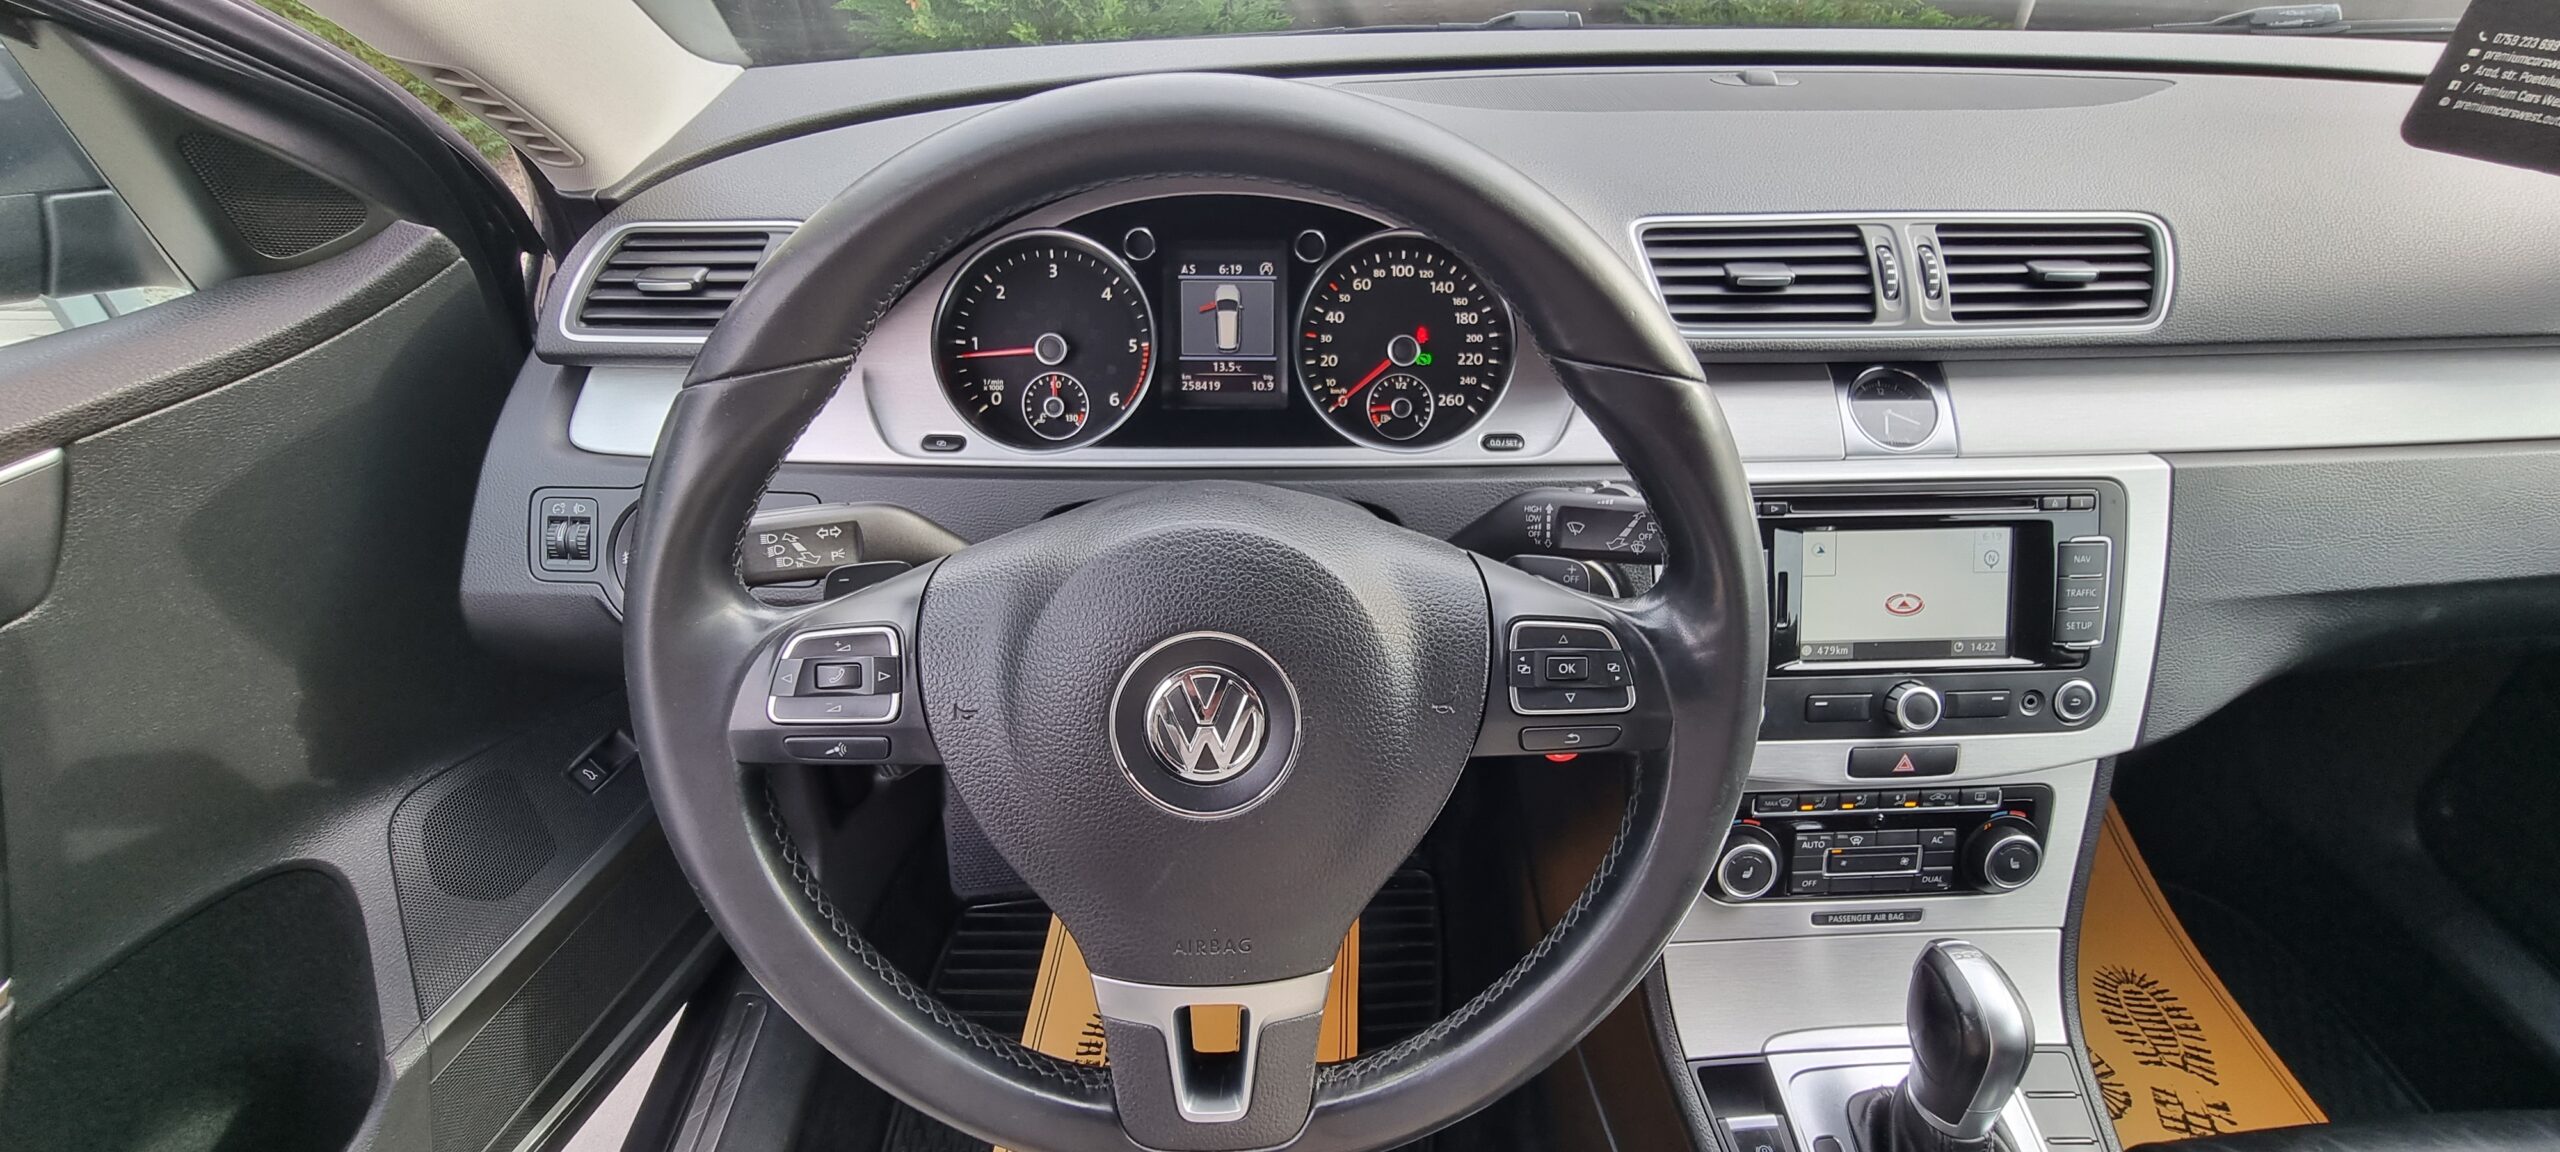 VW PASSAT HIGHLINE DSG, 2.0 TDI, 170 CP